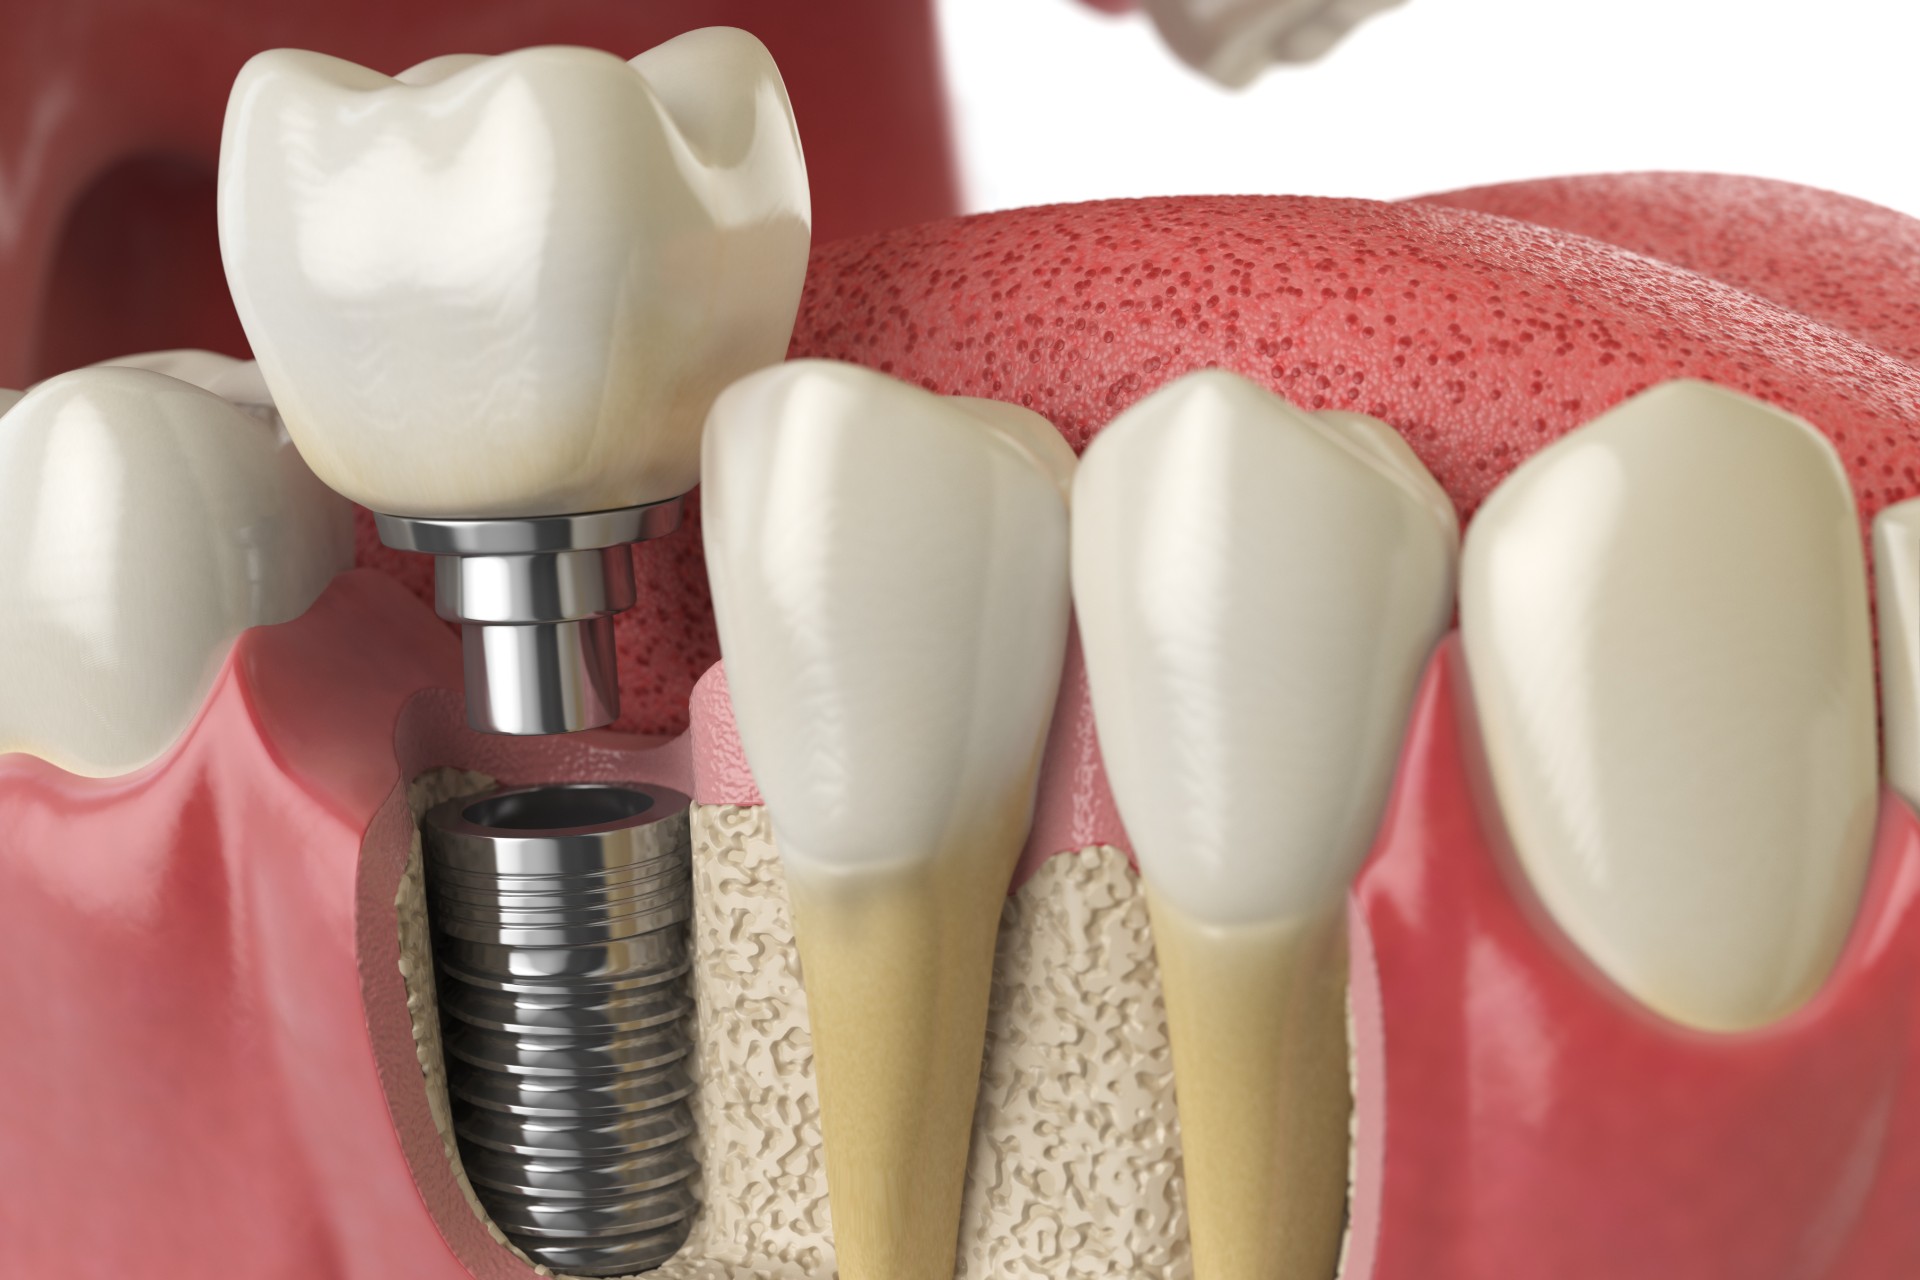 Tooth dental implant in human dentura